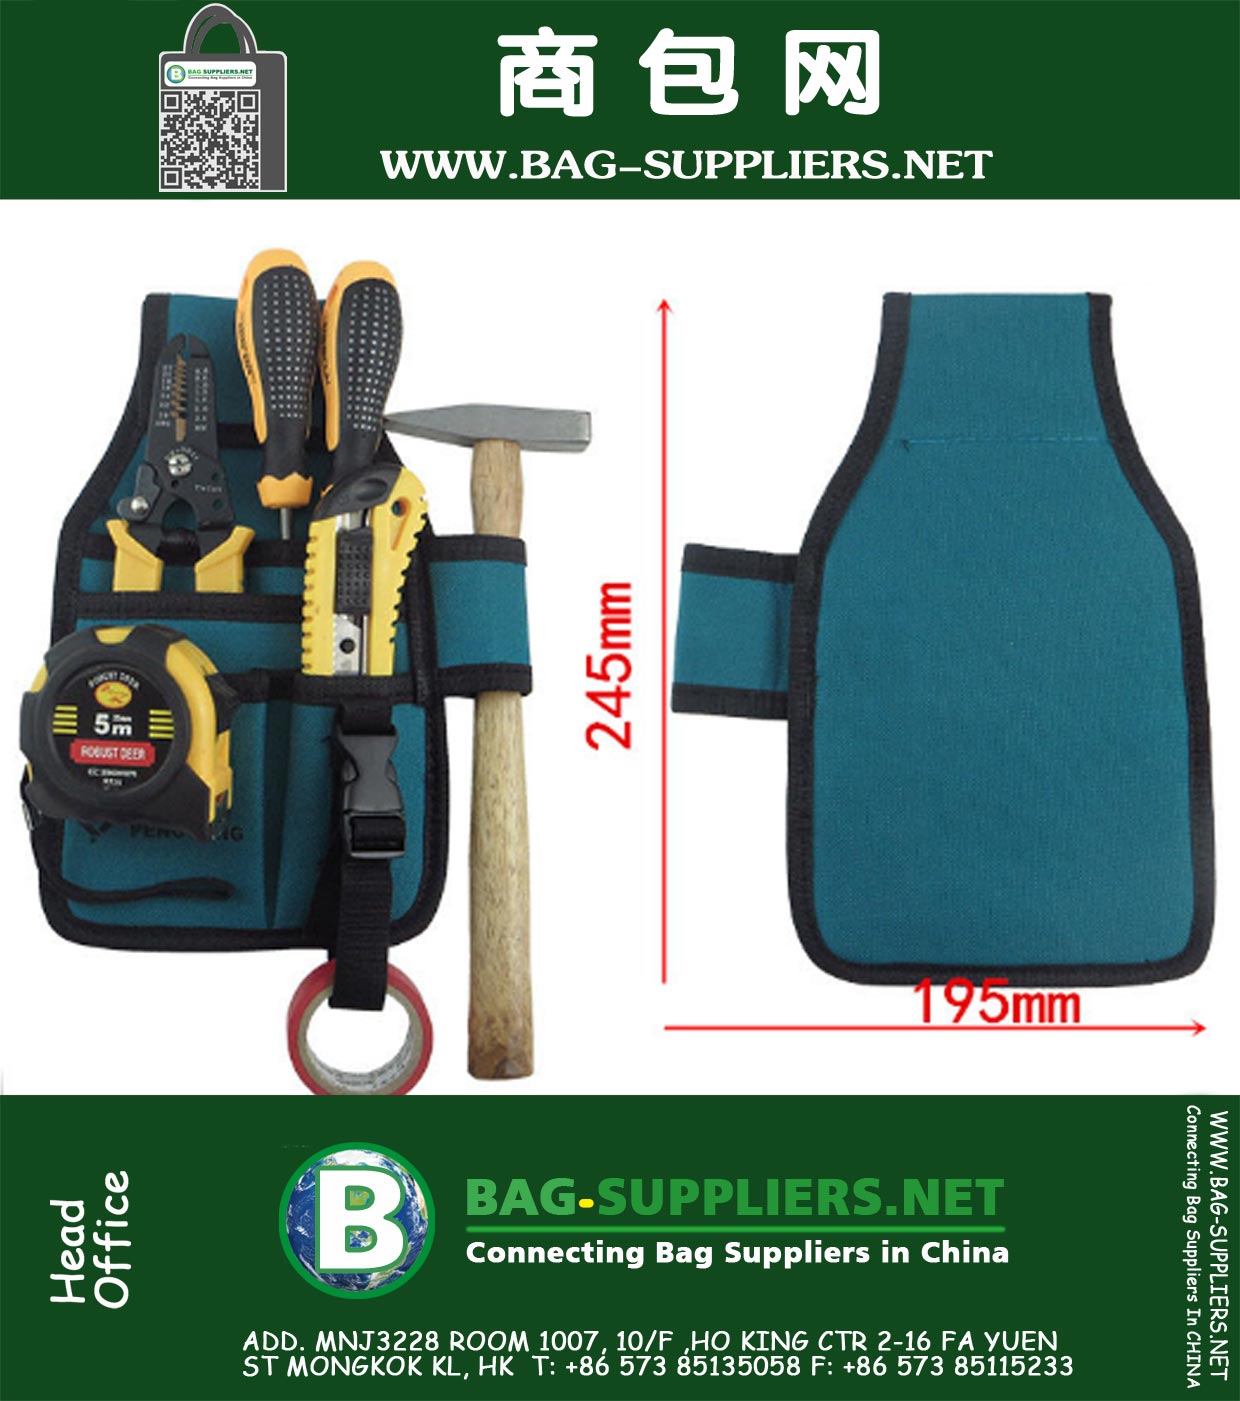 Hardware Mechanic elektricien Waterdichte Canvas Tool Bag Belt Utility Kit Pocket Pouch Organizer